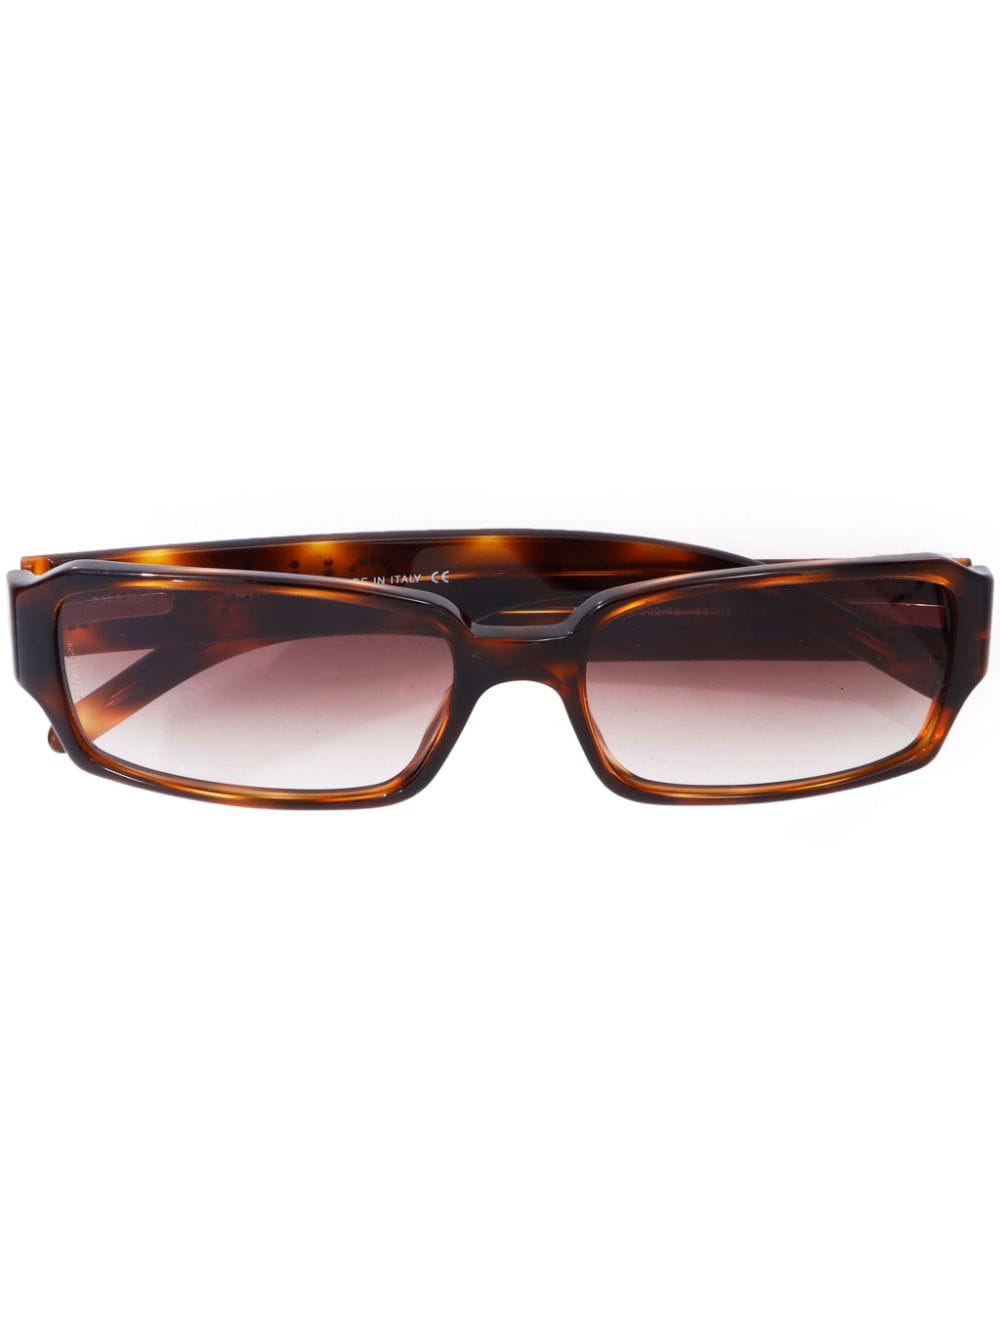 CHANEL Pre-Owned 2000s tortoiseshell rectangle-frame sunglasses - Brown